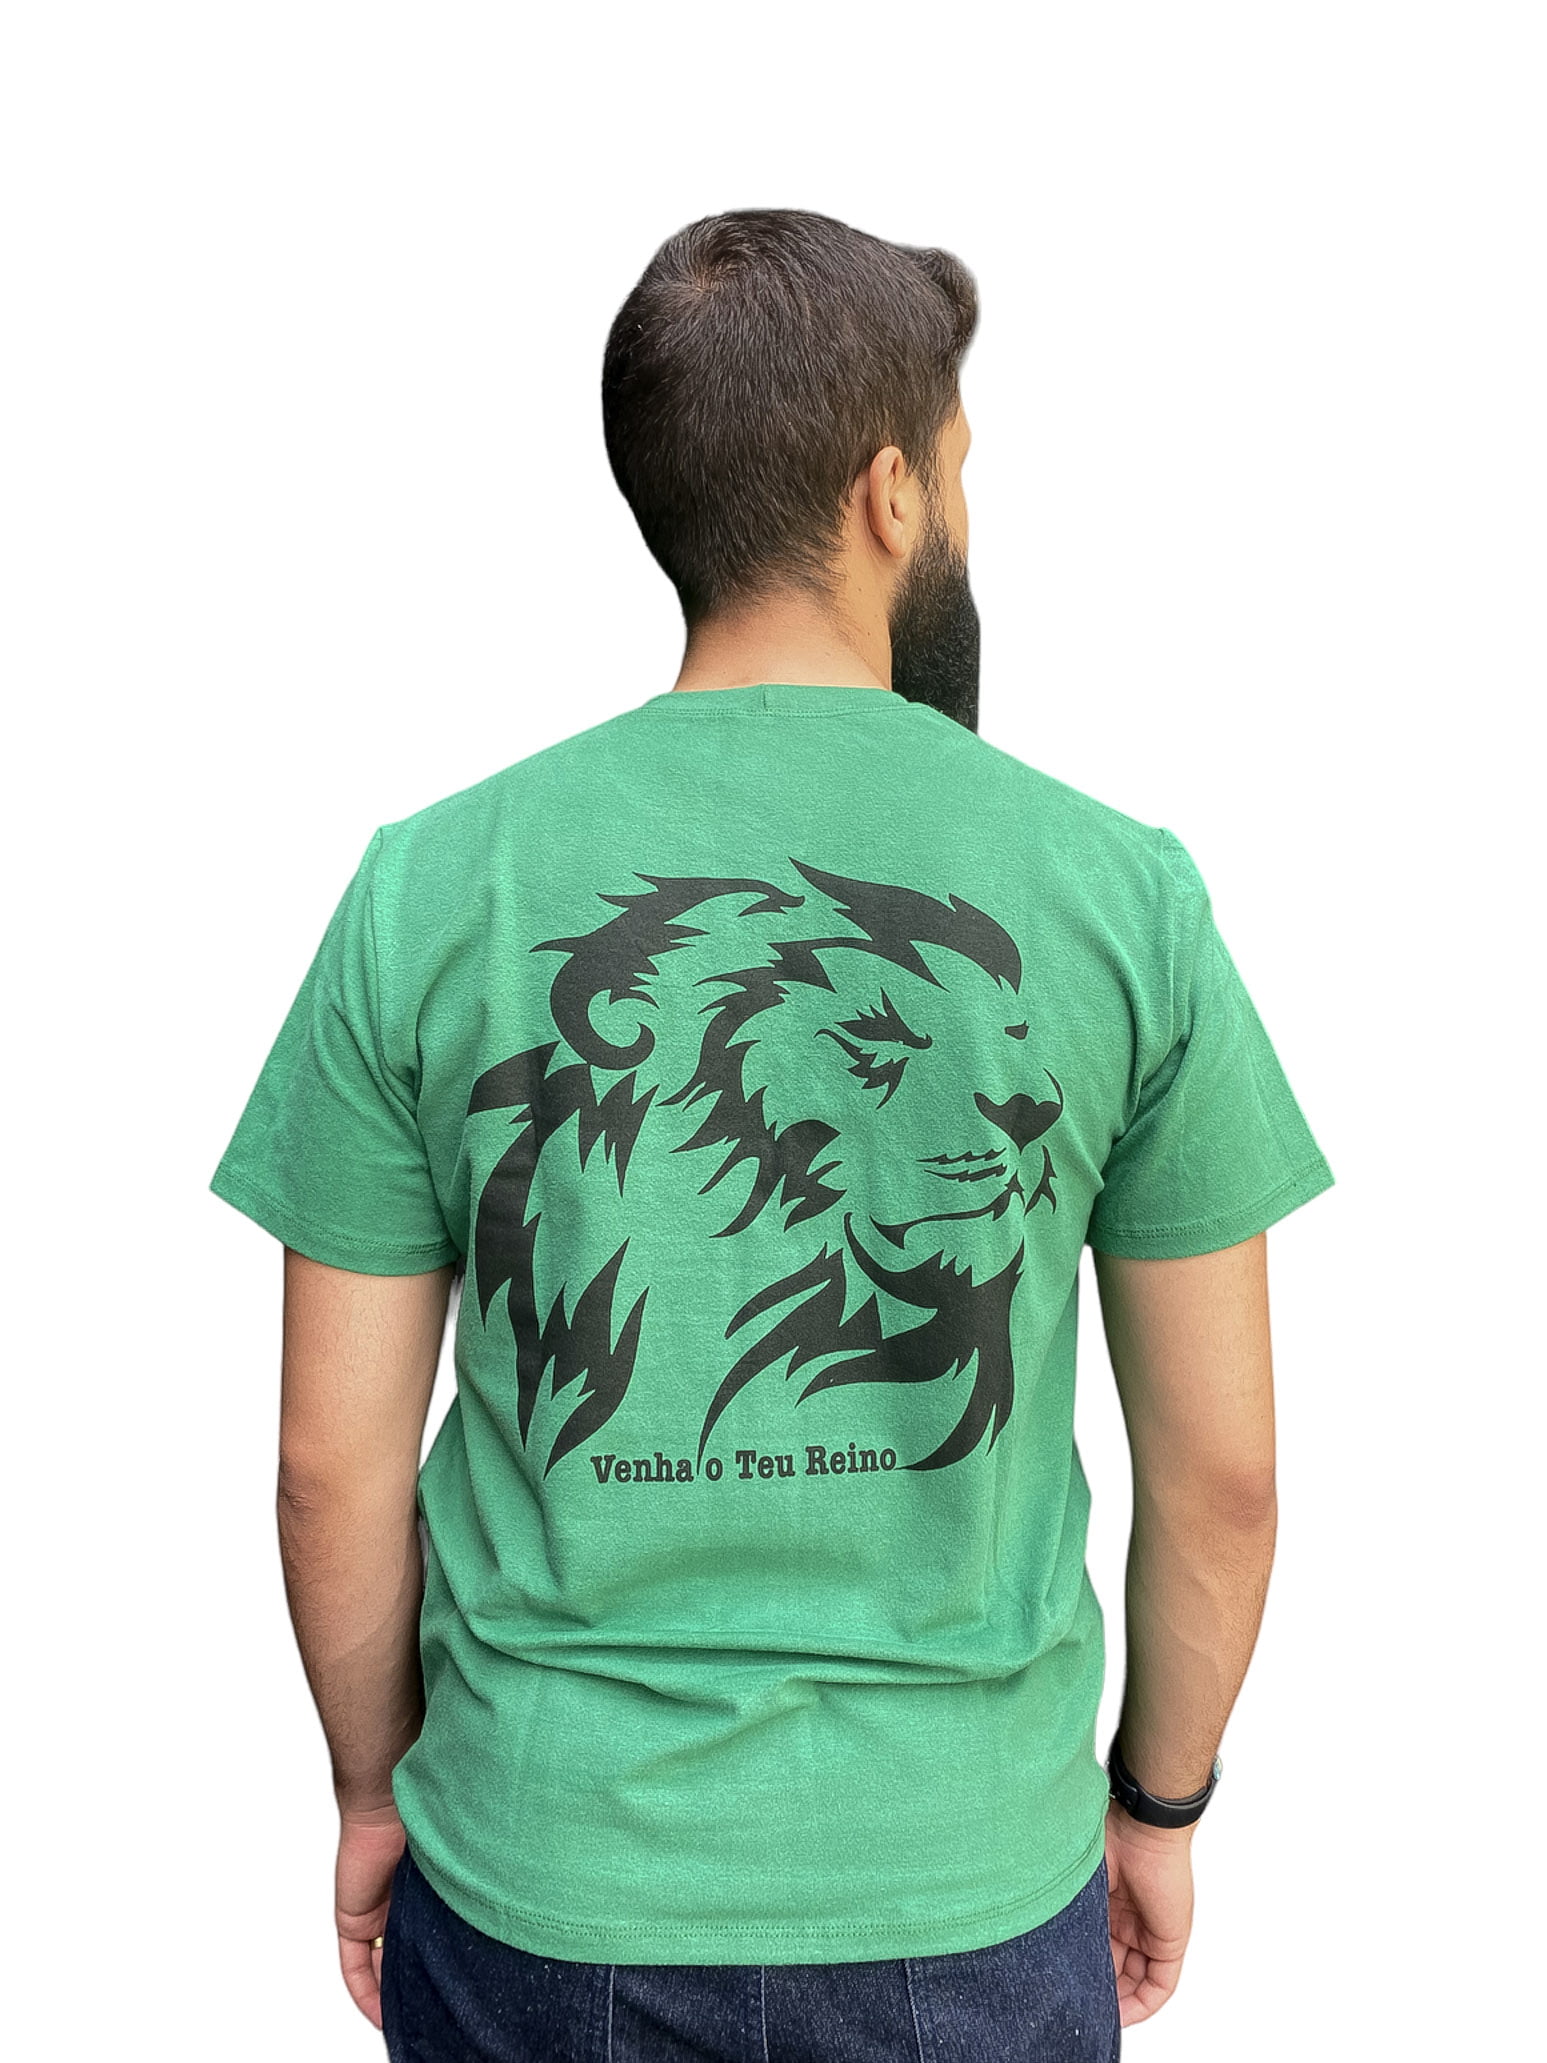 Camiseta CTM273 - Venha o Teu Reino